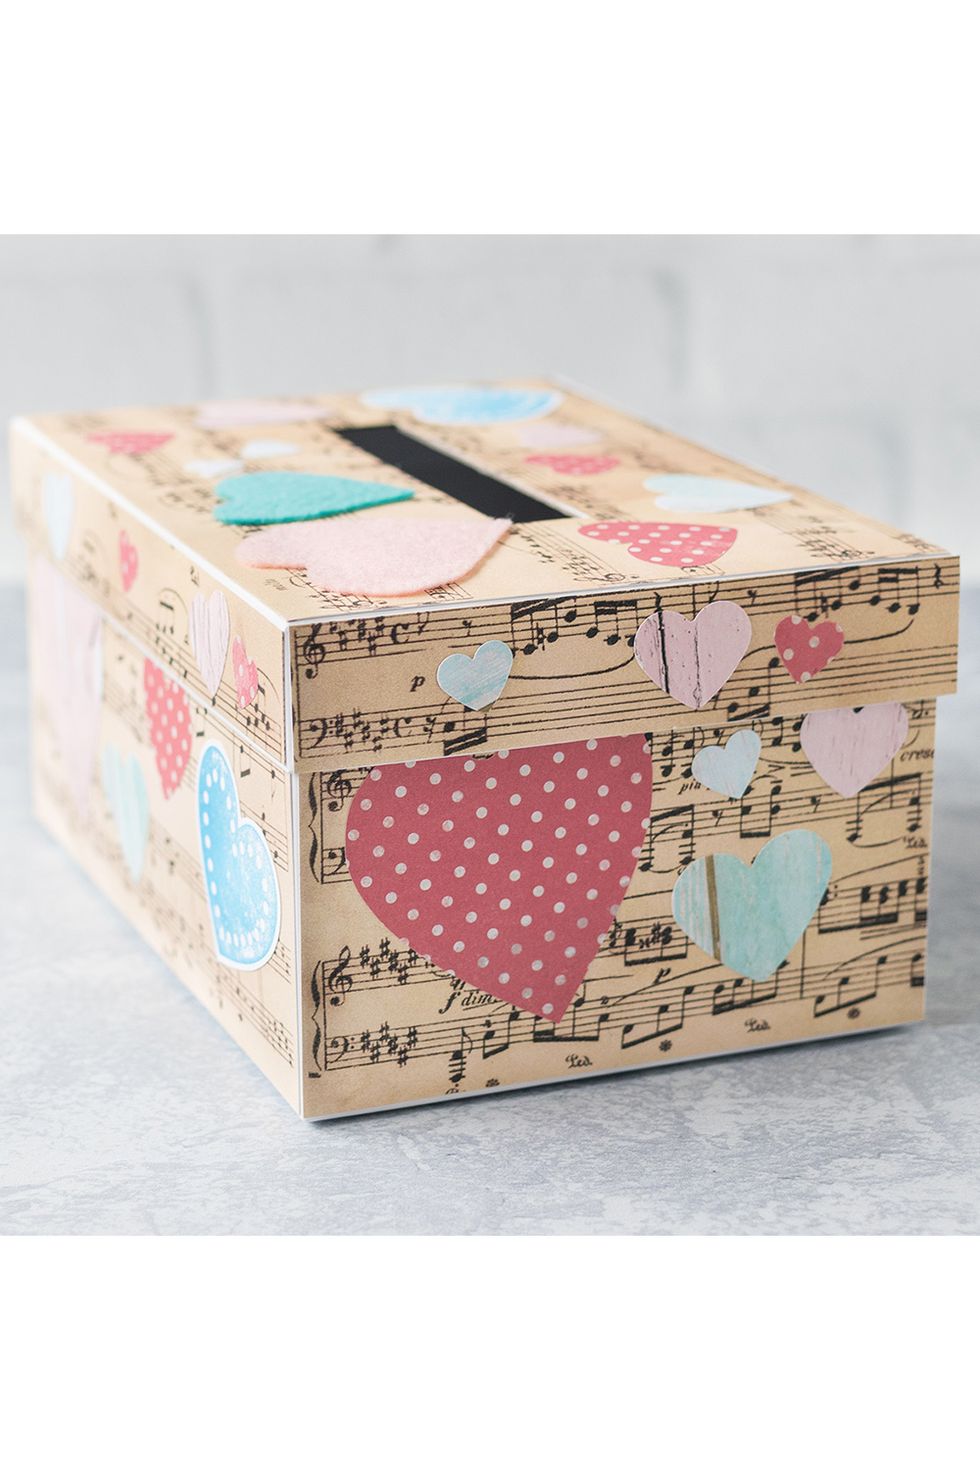 15 Handmade Valentine Box Ideas for School - Giggles Galore